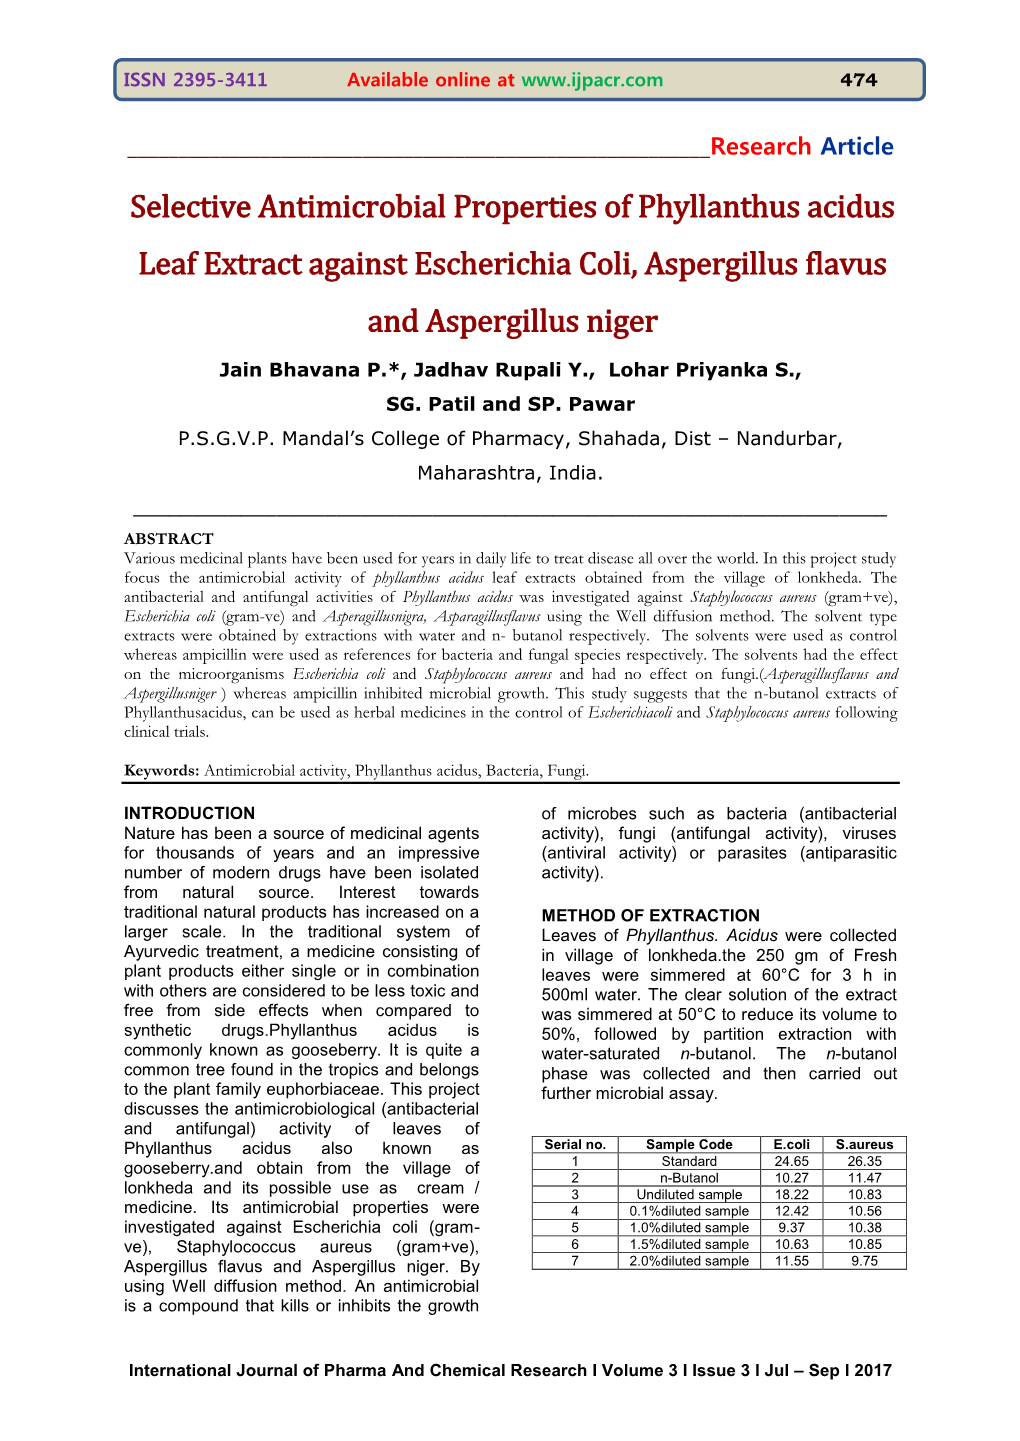 Selective Antimicrobial Properties of Phyllanthus Acidus Leaf Extract Against Escherichia Coli, Aspergillus Flavus and Aspergillus Niger